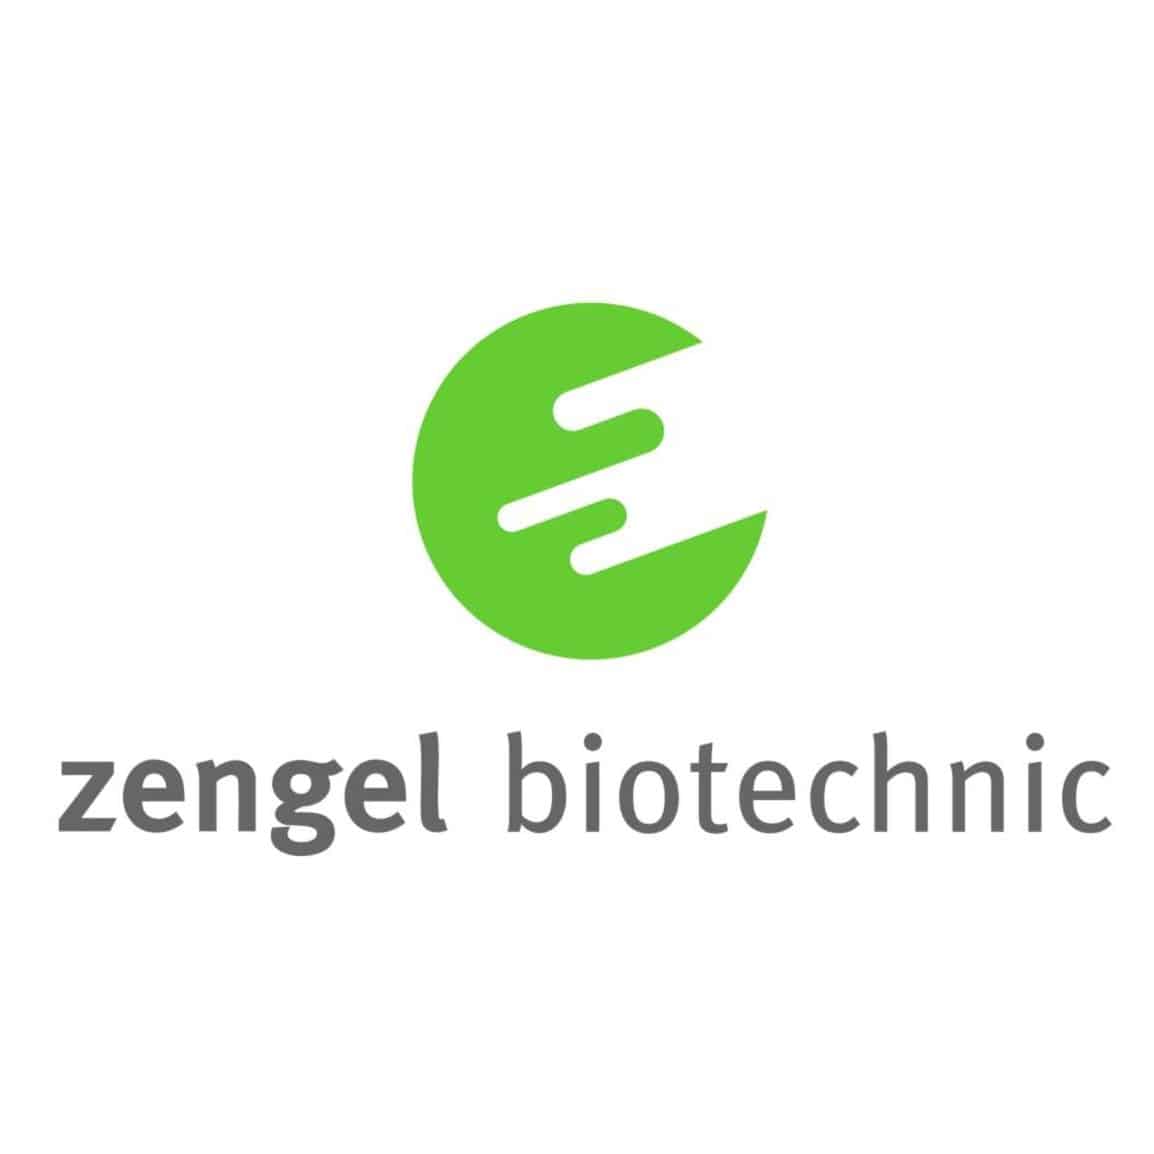 Zengel biotechnic GmbH & Co. KG